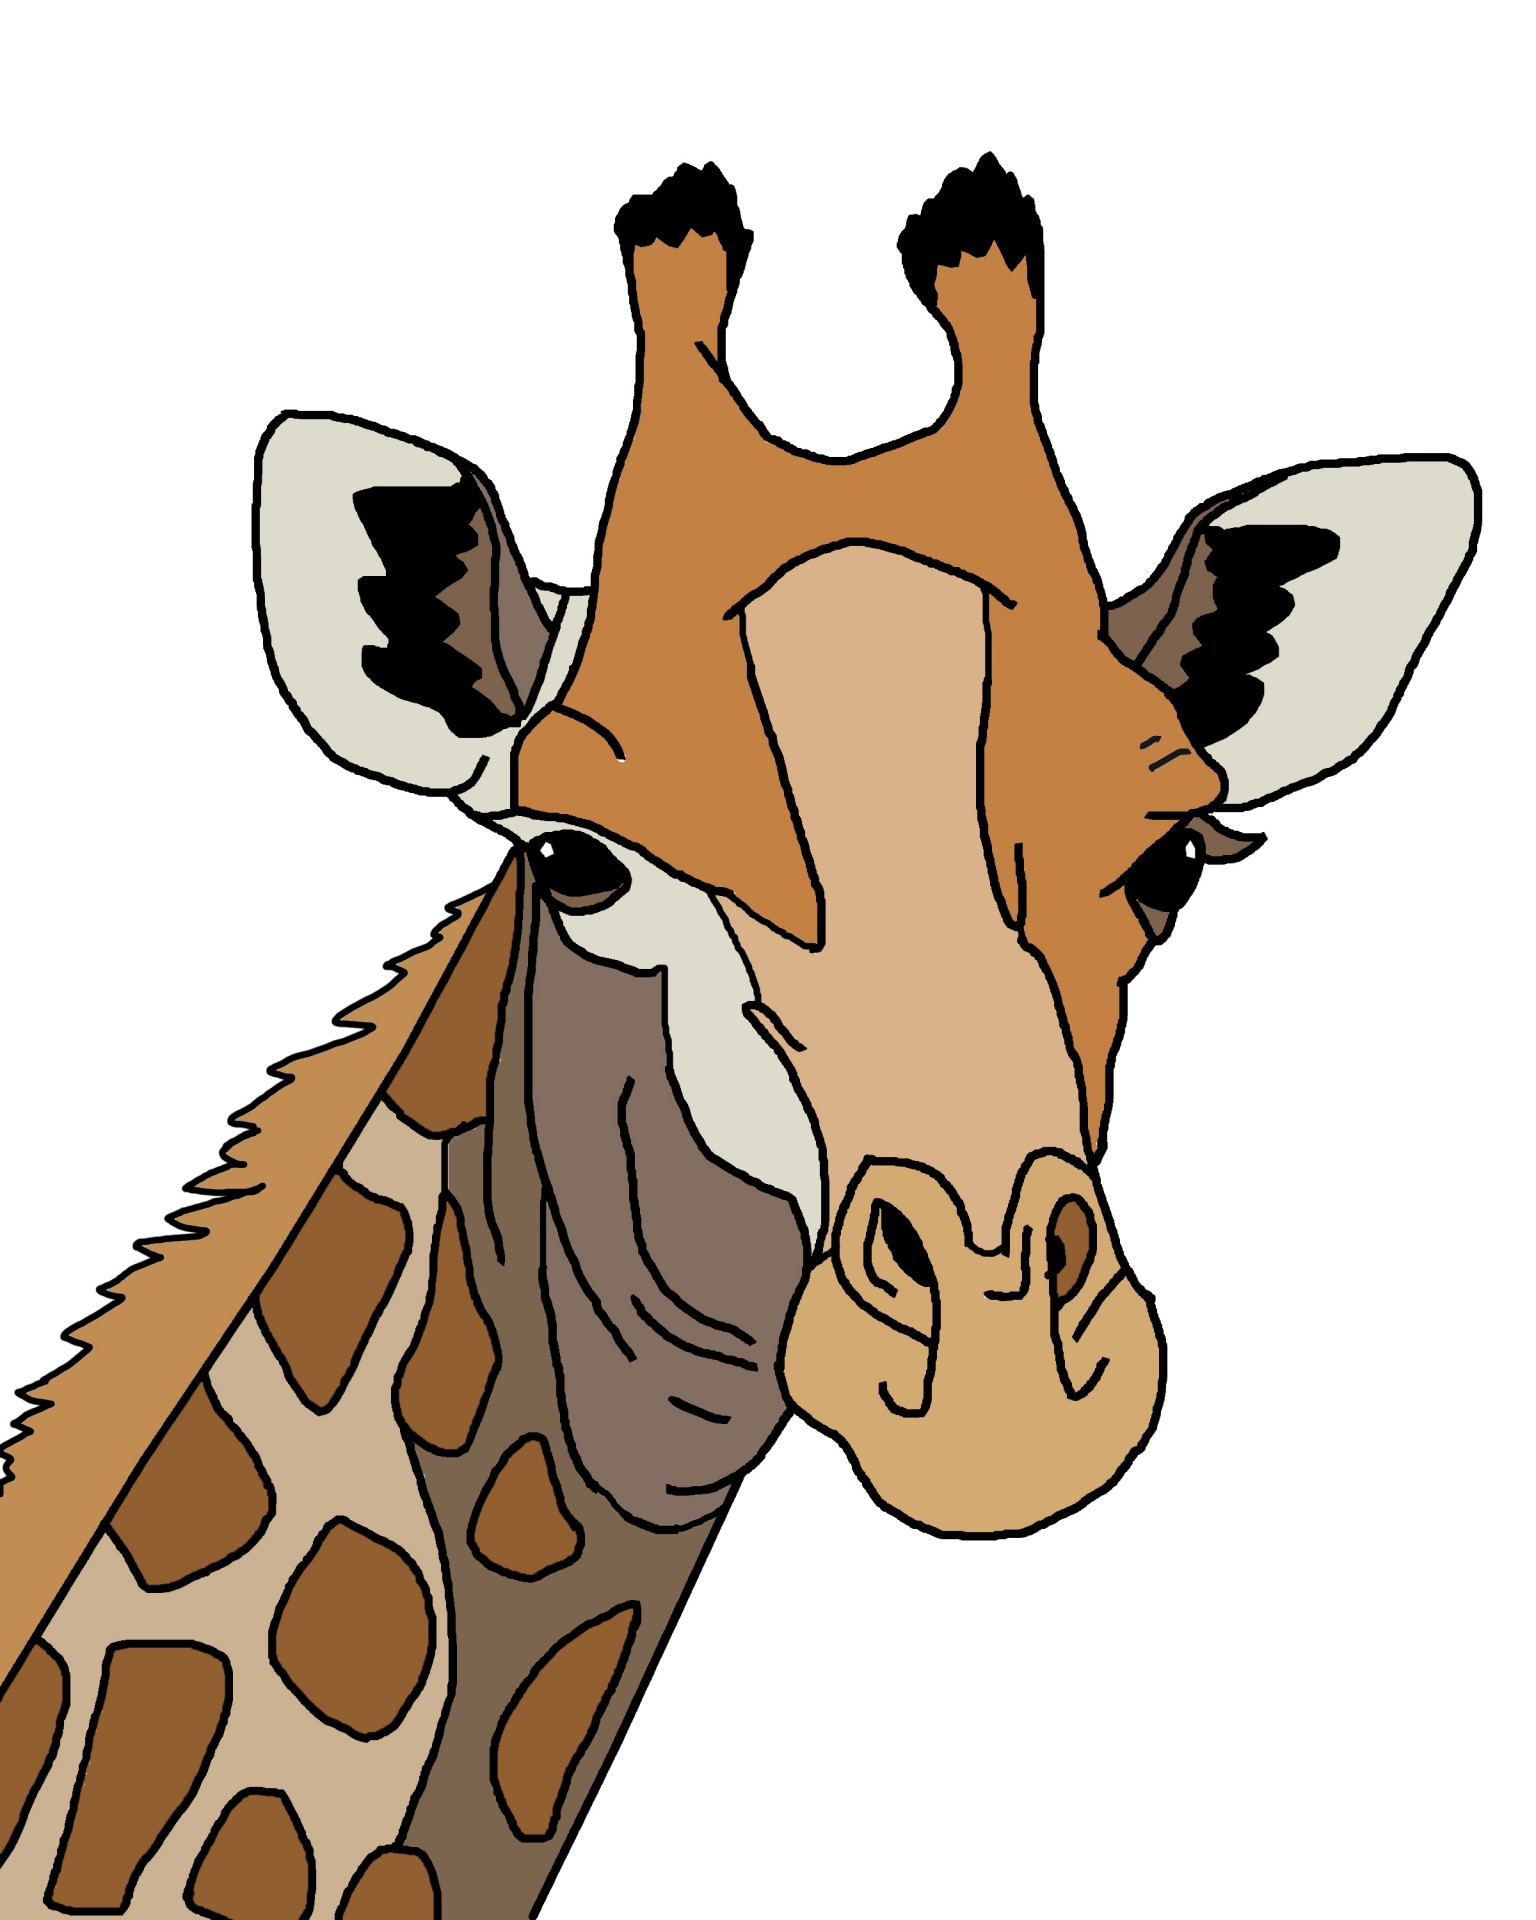 Giraffe Illustration In Color Free Stock Photo - Public Domain ...